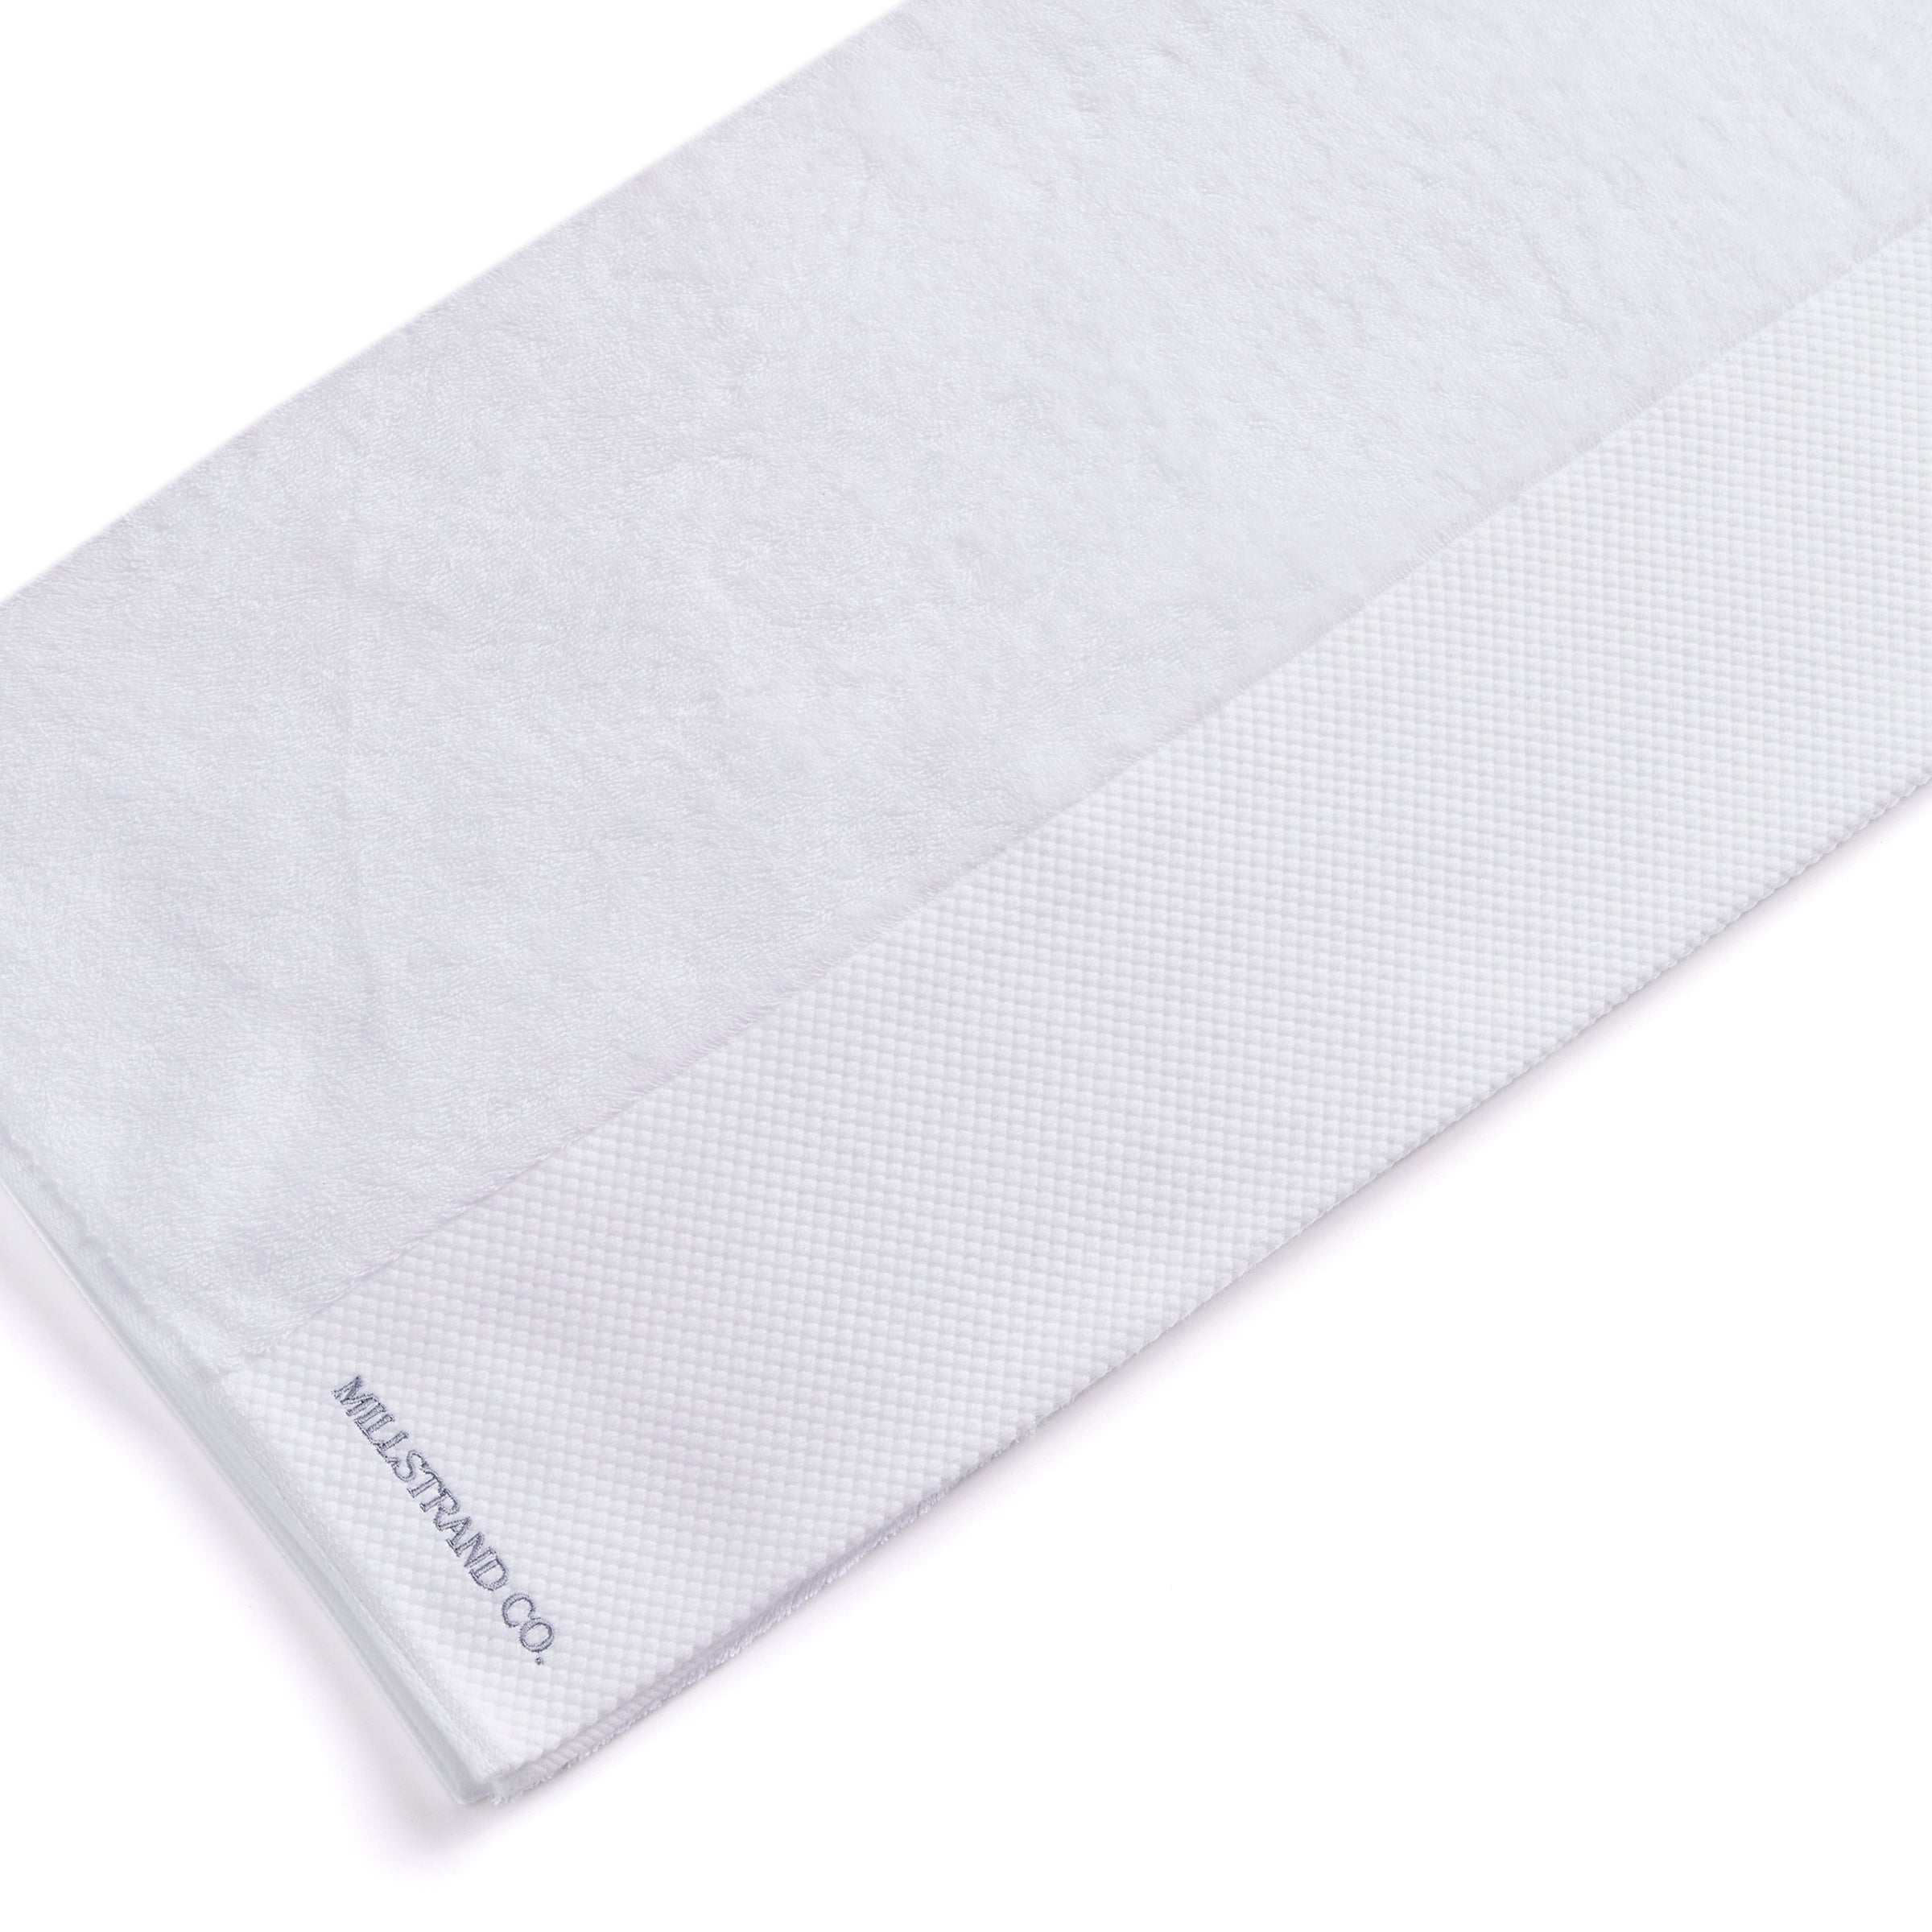 Bath Lana Set Millstrand Co. Ivory White Towel in